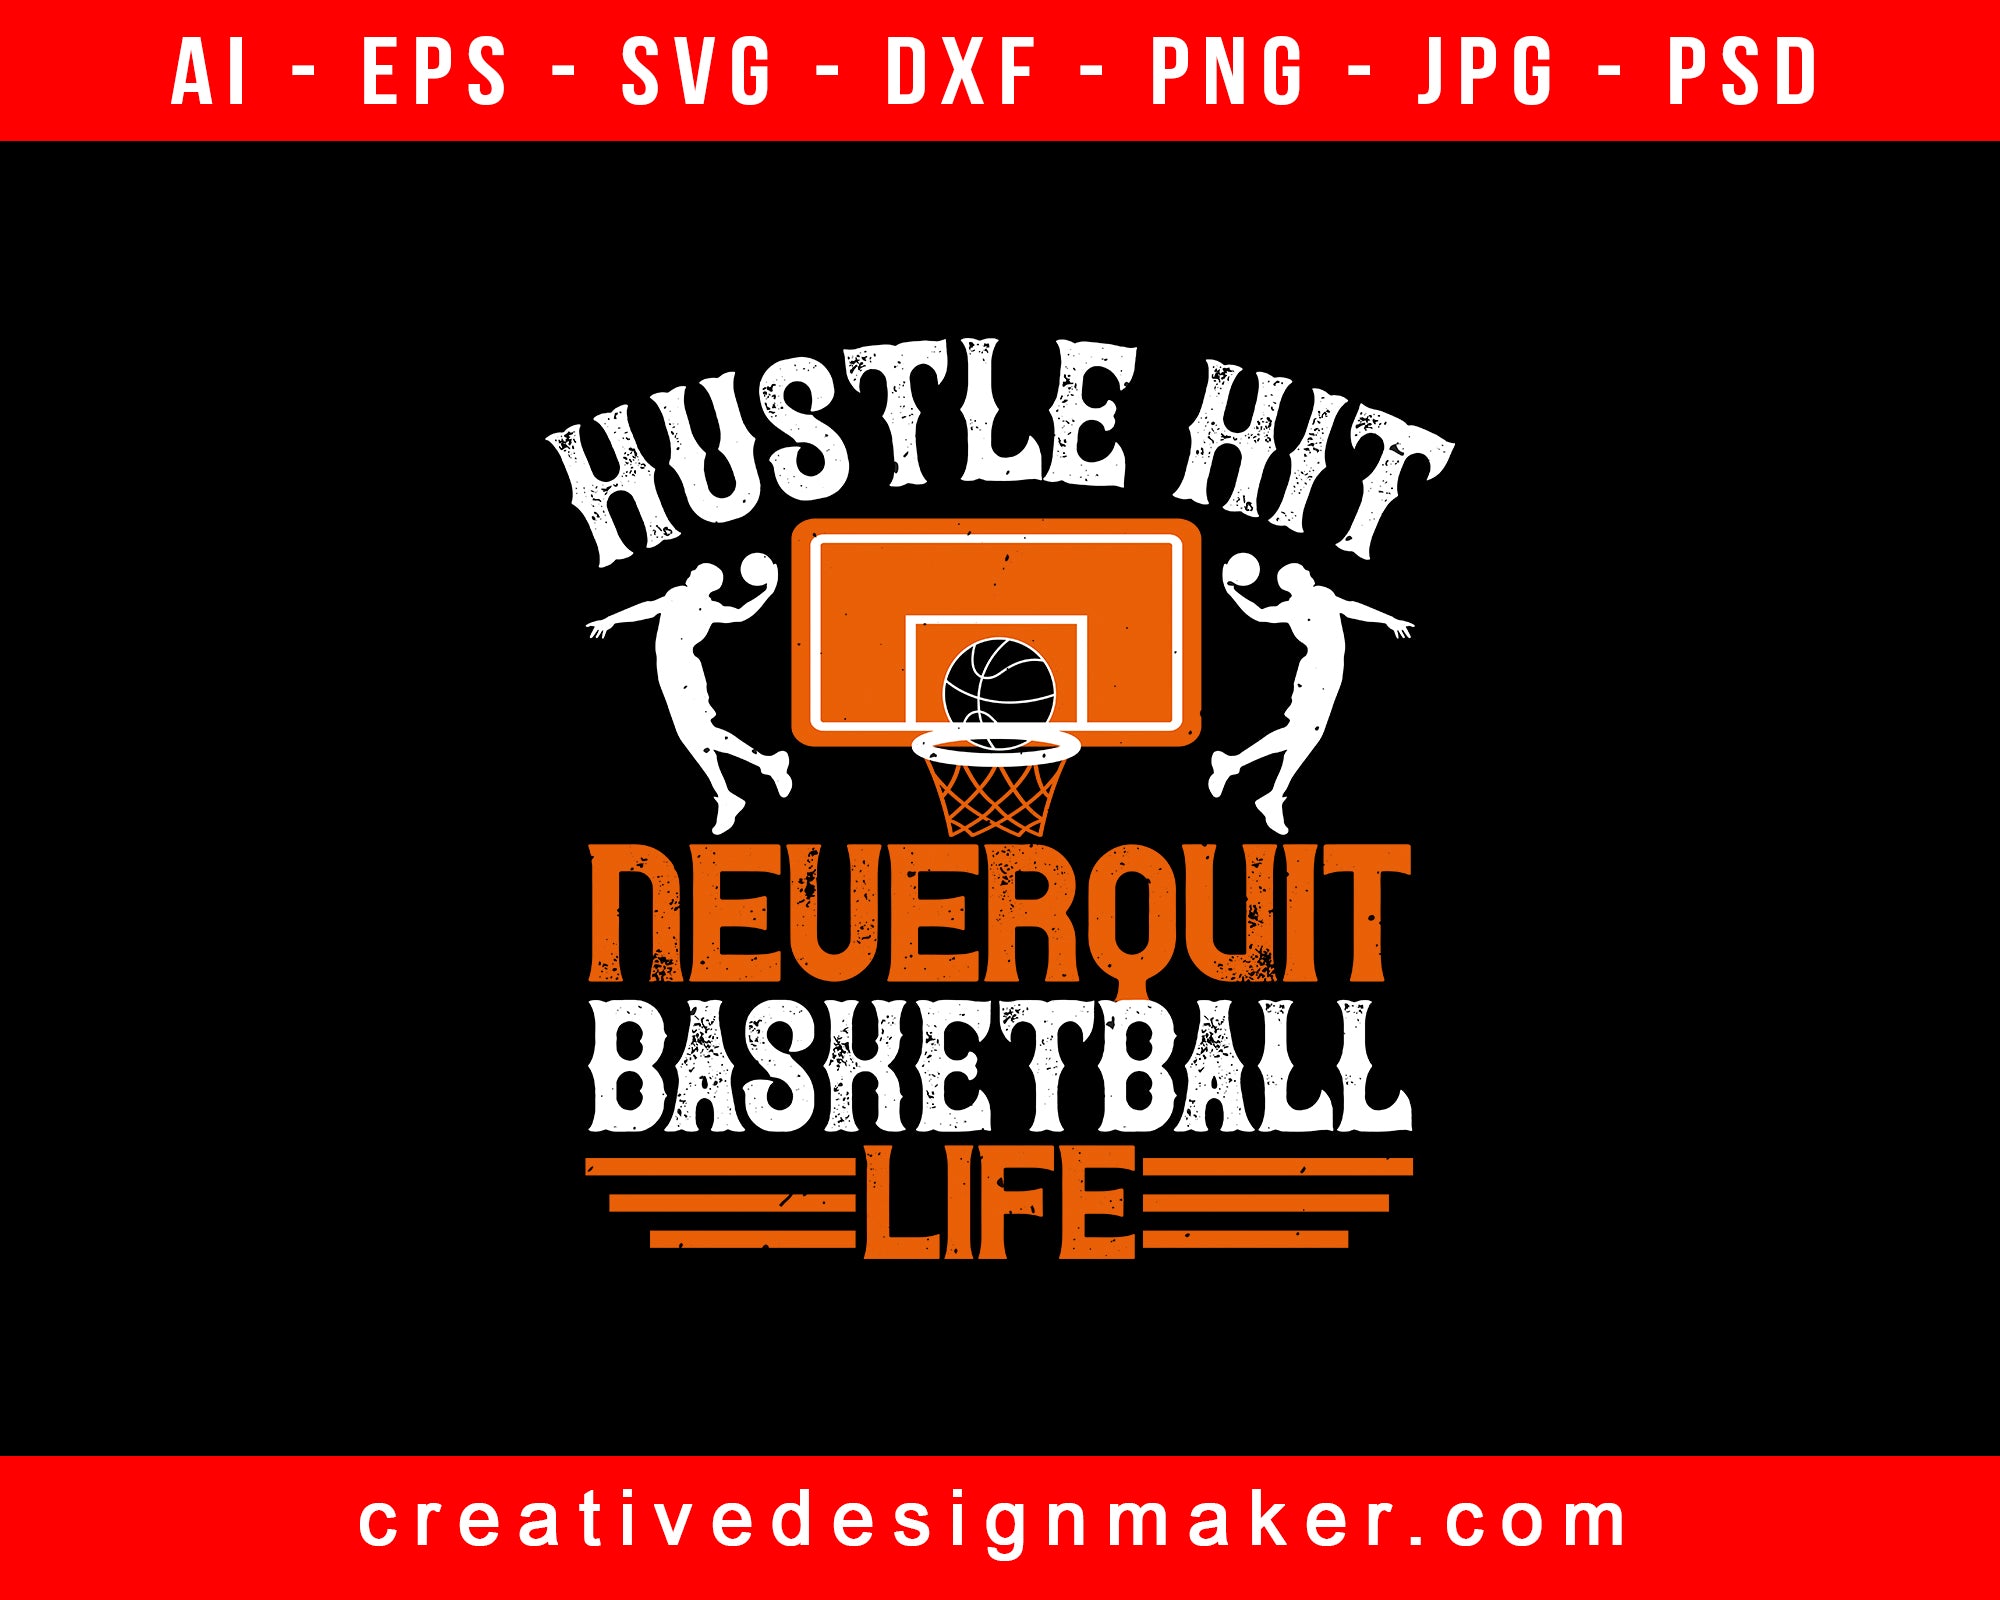 Hustle, hit. Never quit basketball life Print Ready Editable T-Shirt SVG Design!